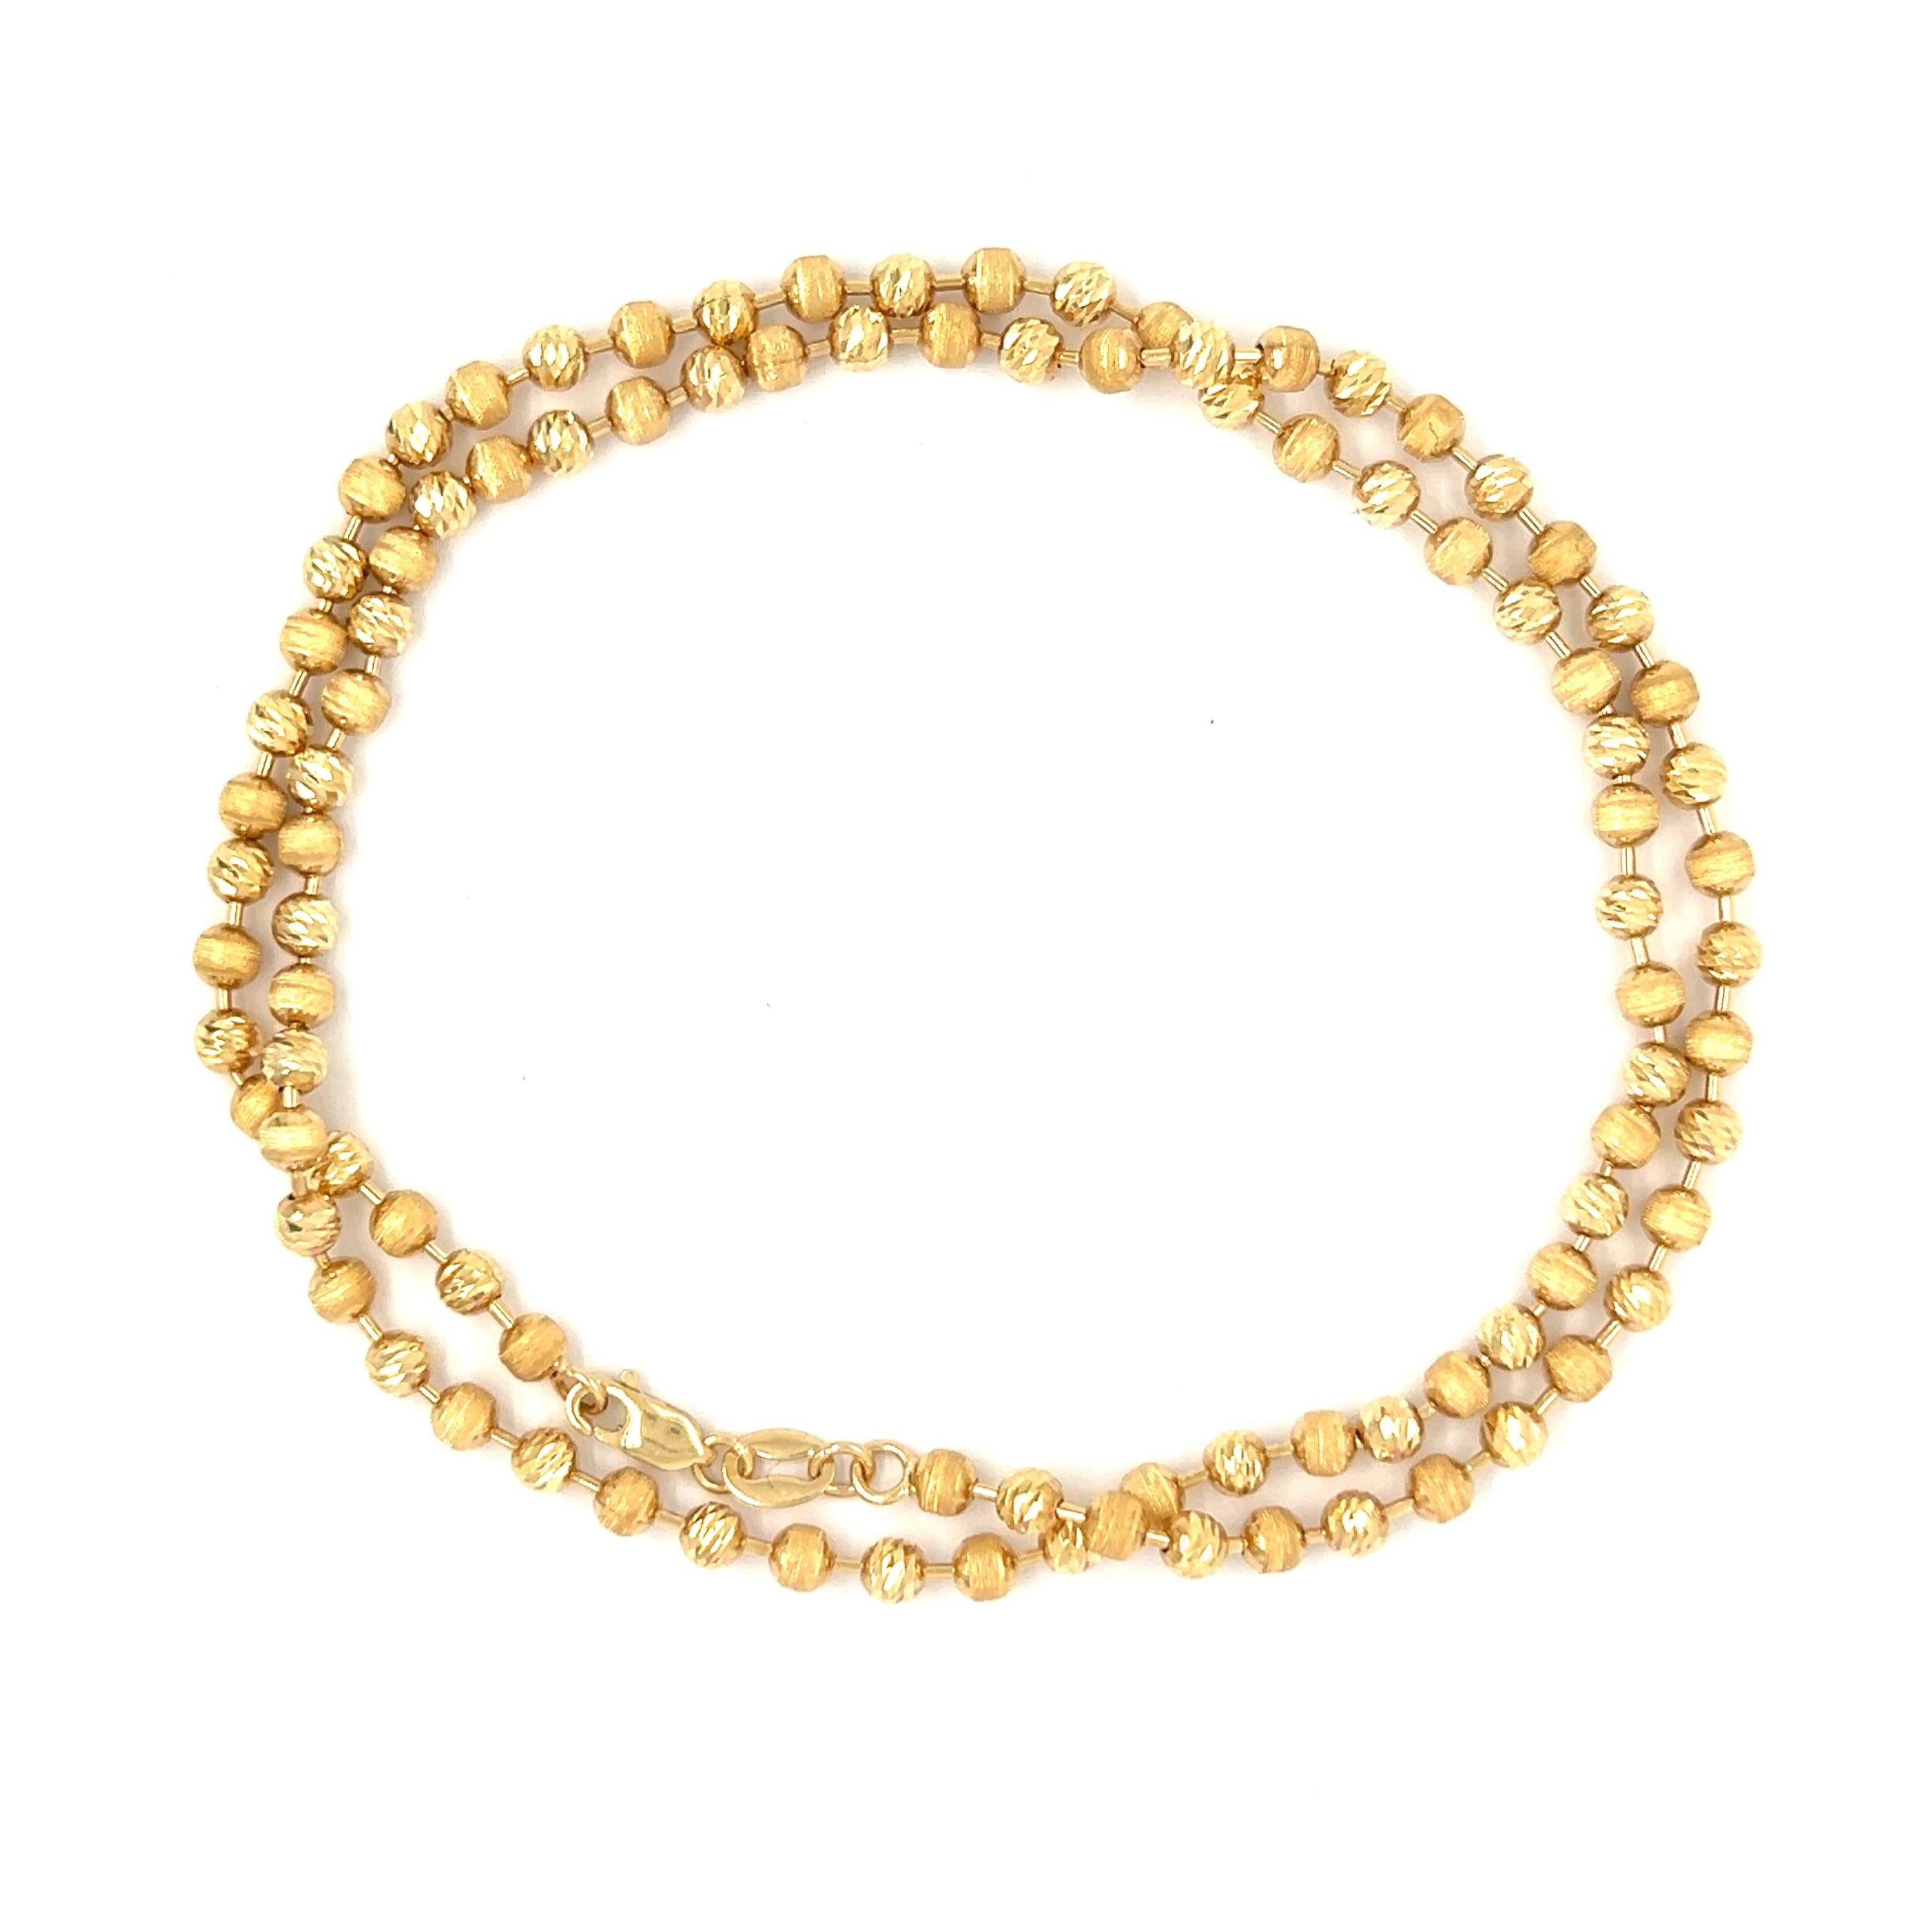 Vintage 16" 14k Gold Textured Ball Chain